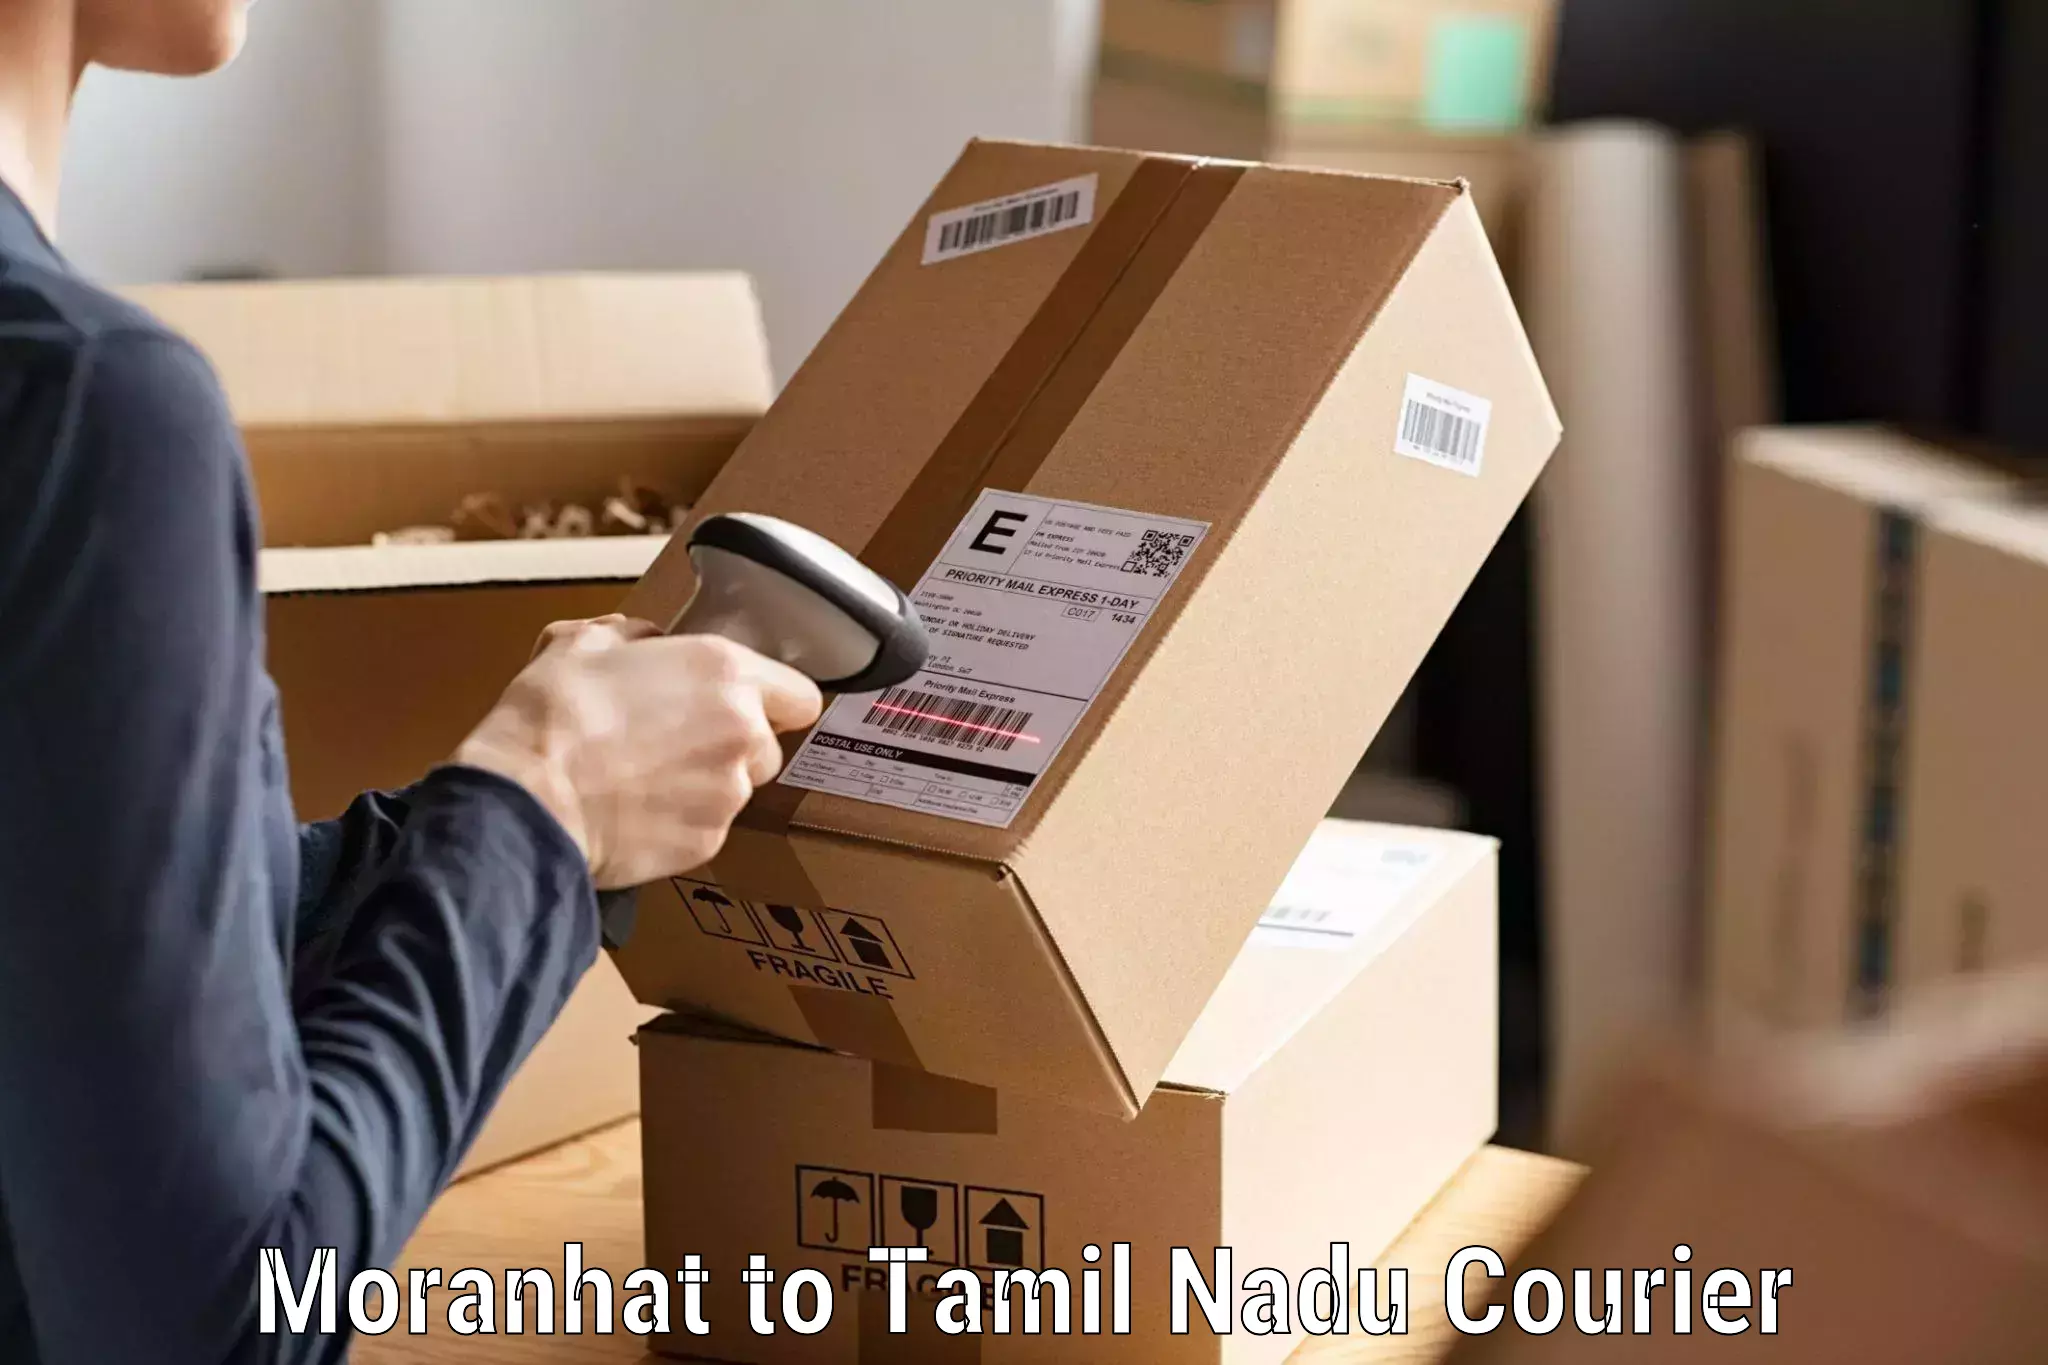 Smart shipping technology Moranhat to Thiruvadanai